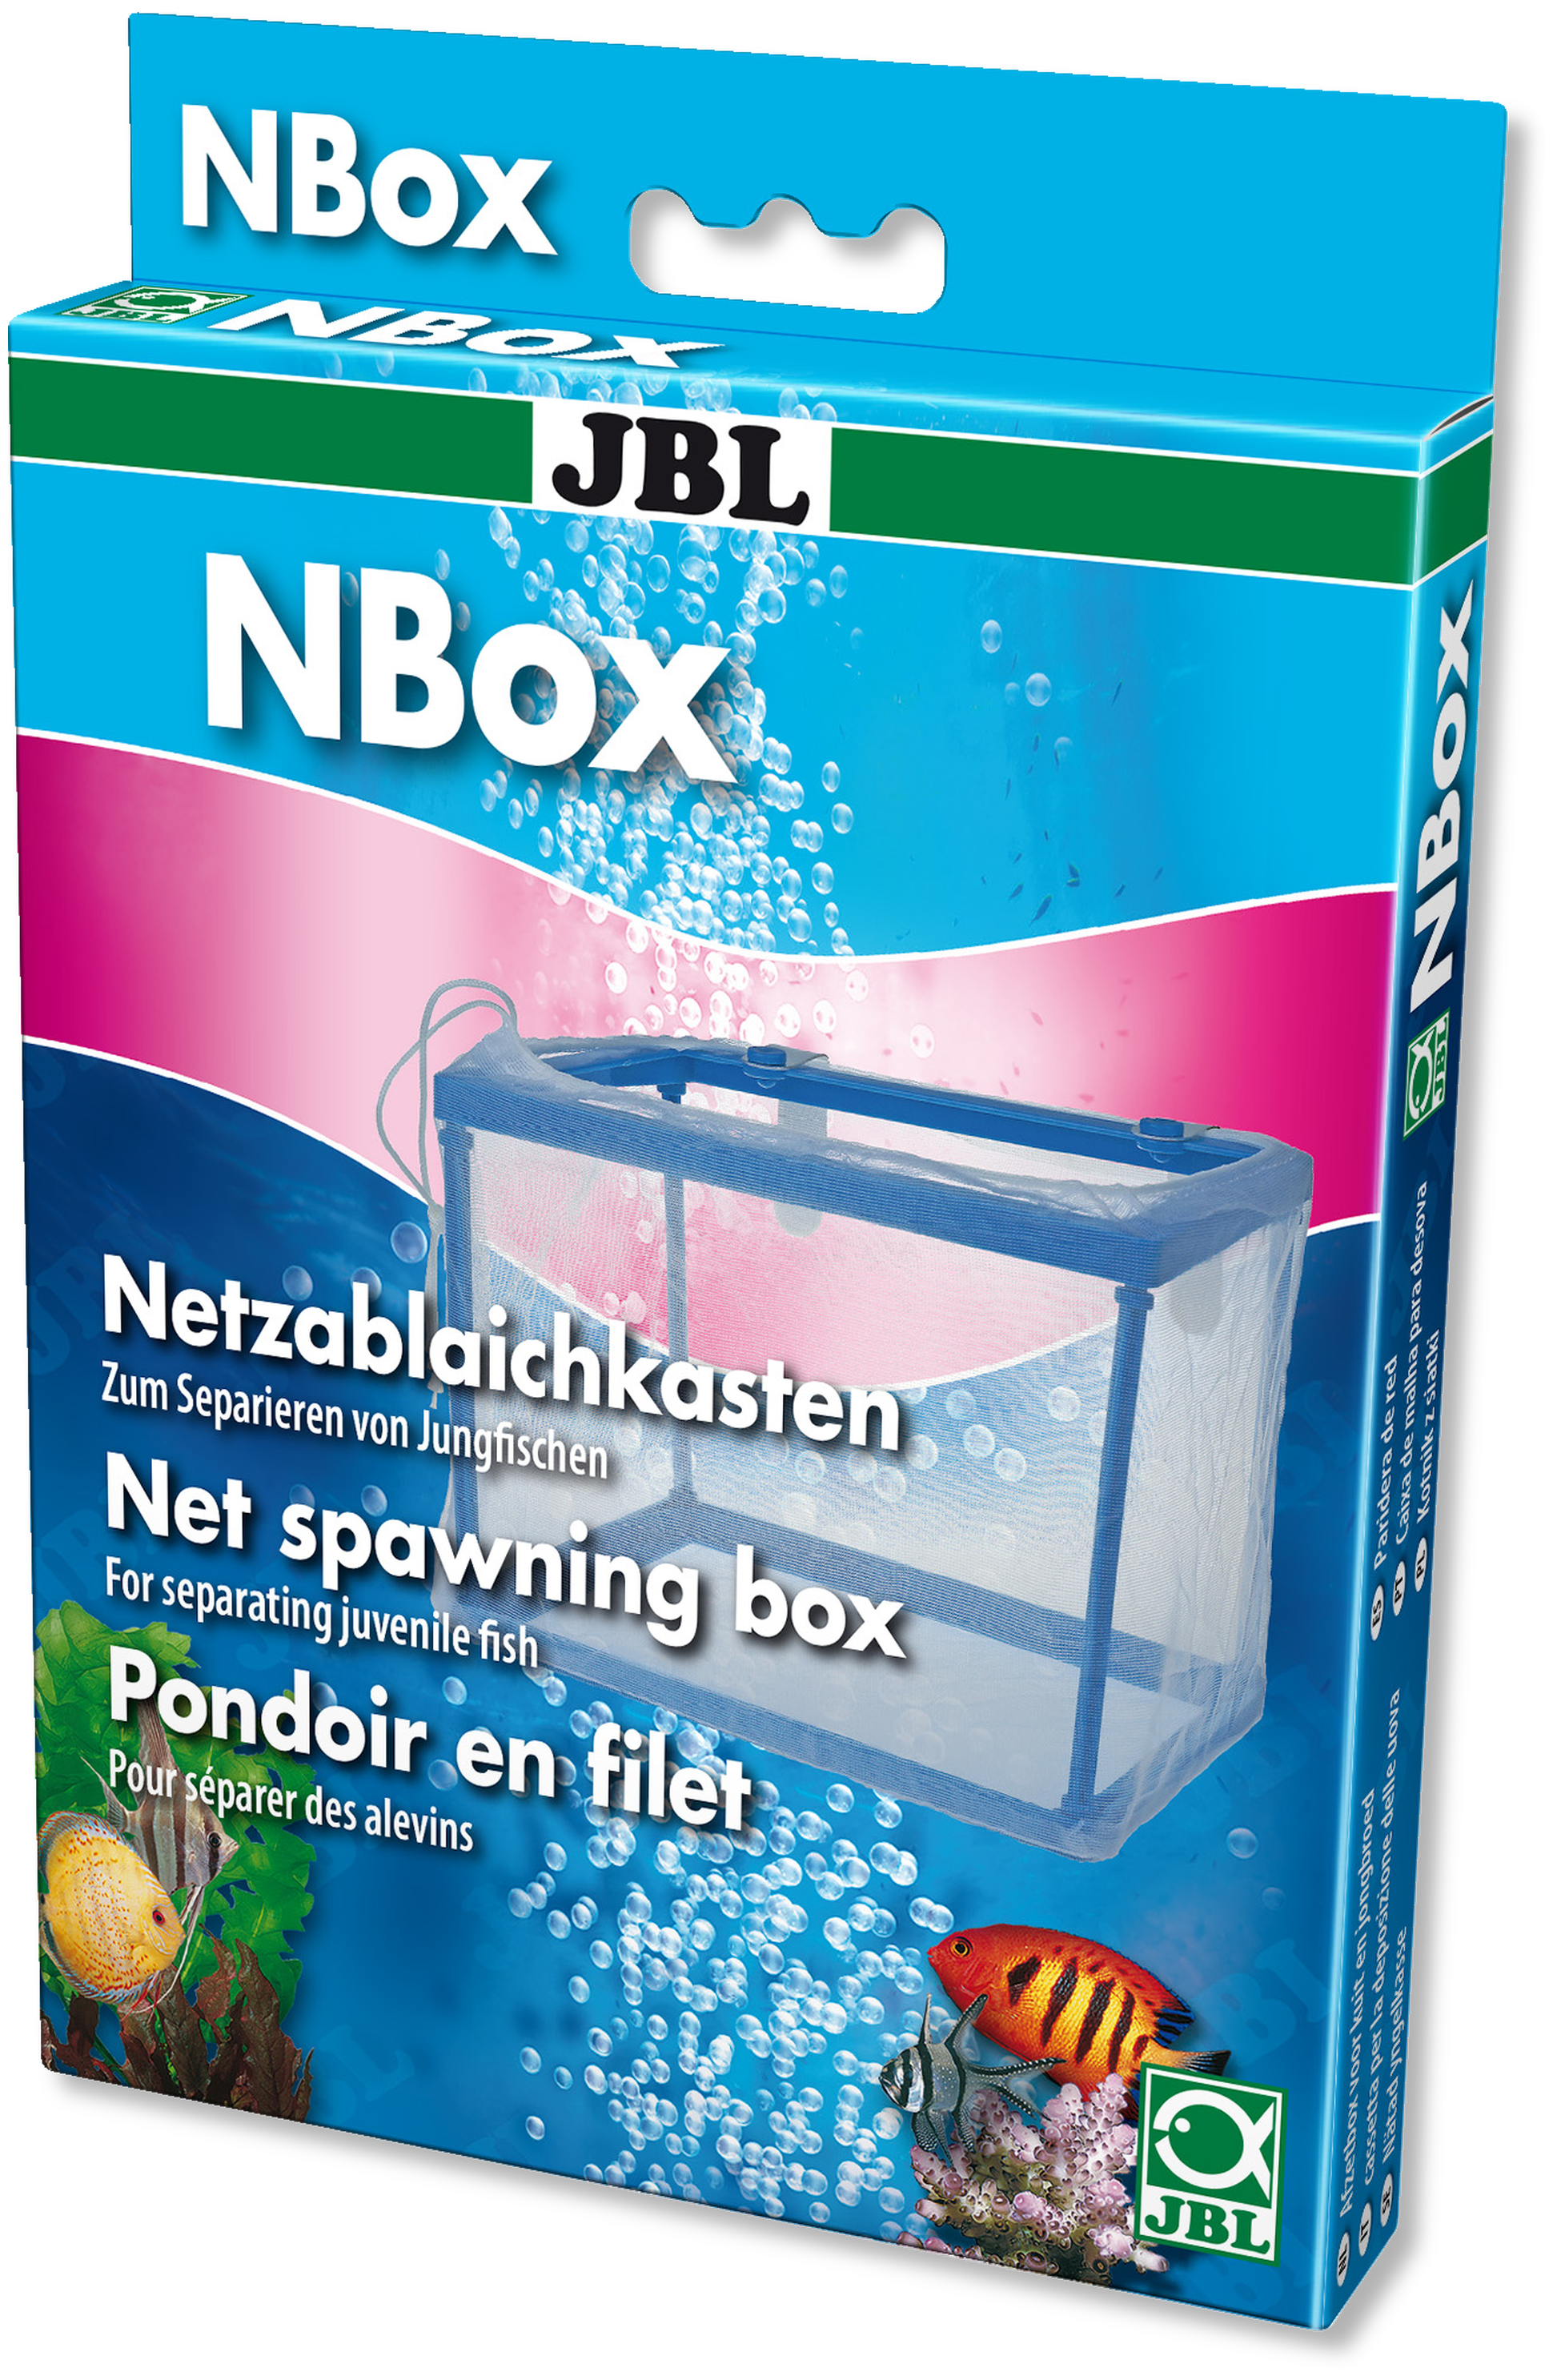 JBL Nbox Netzablaichkasten